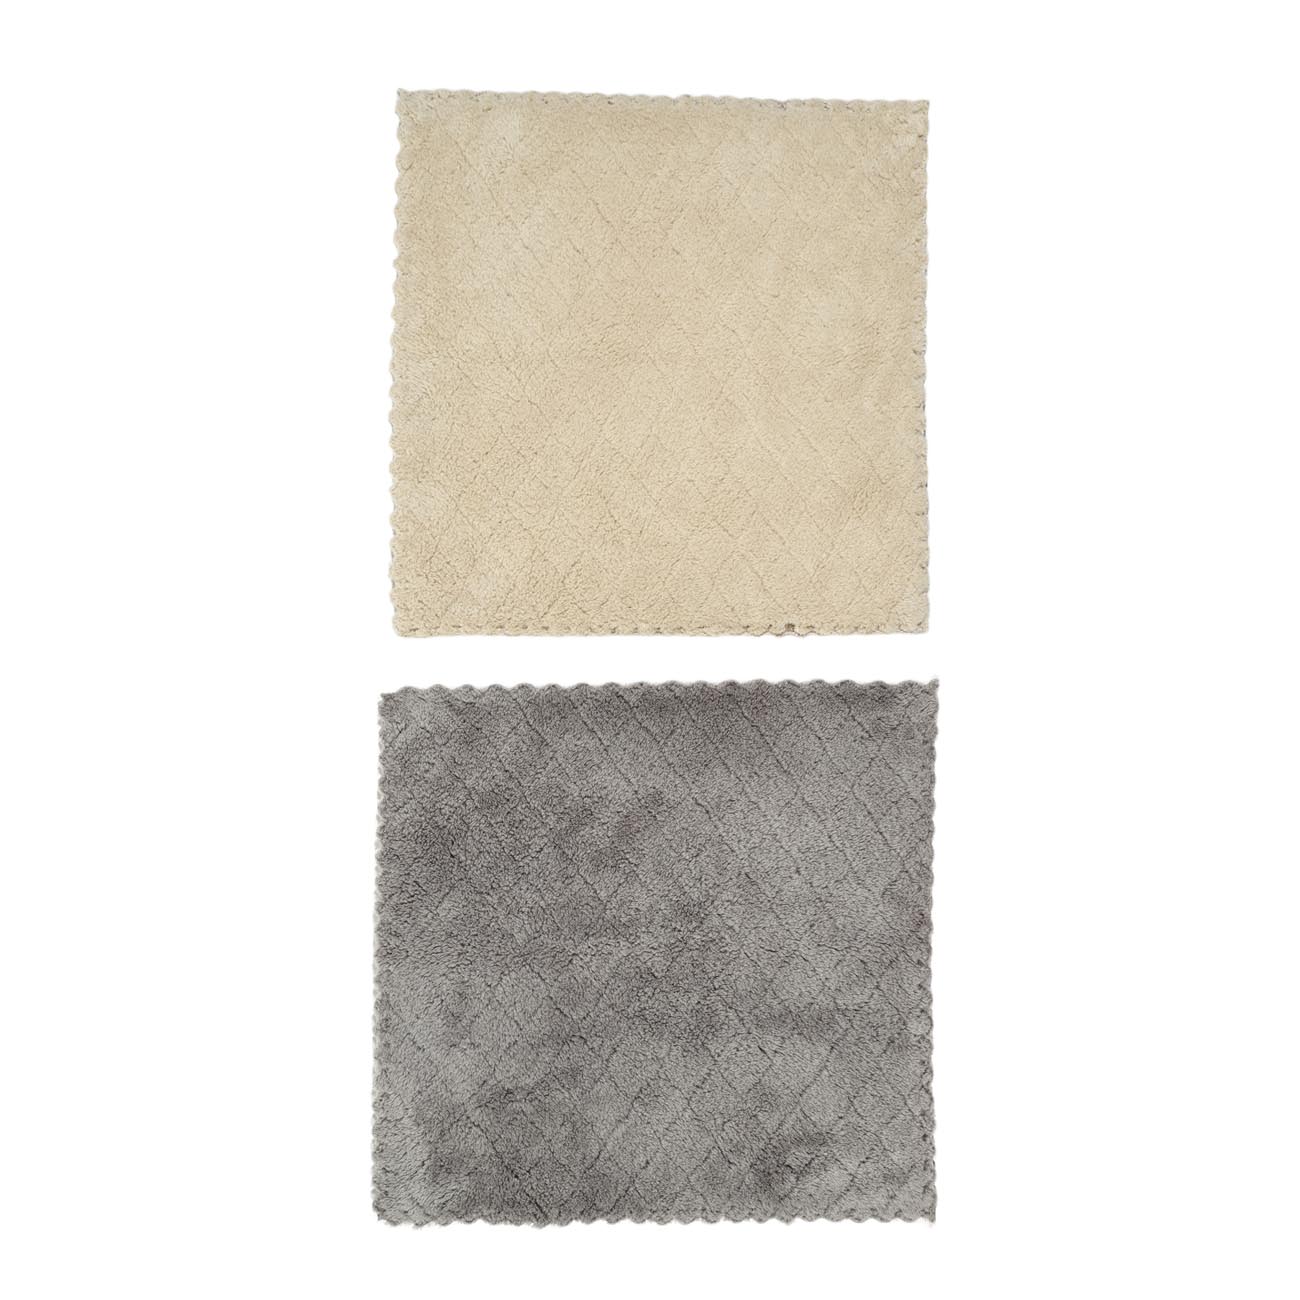 Kitchen cloth, 30x30 cm, 2 pcs, microfiber, beige/gray, Pile with patterns, Clean изображение № 2